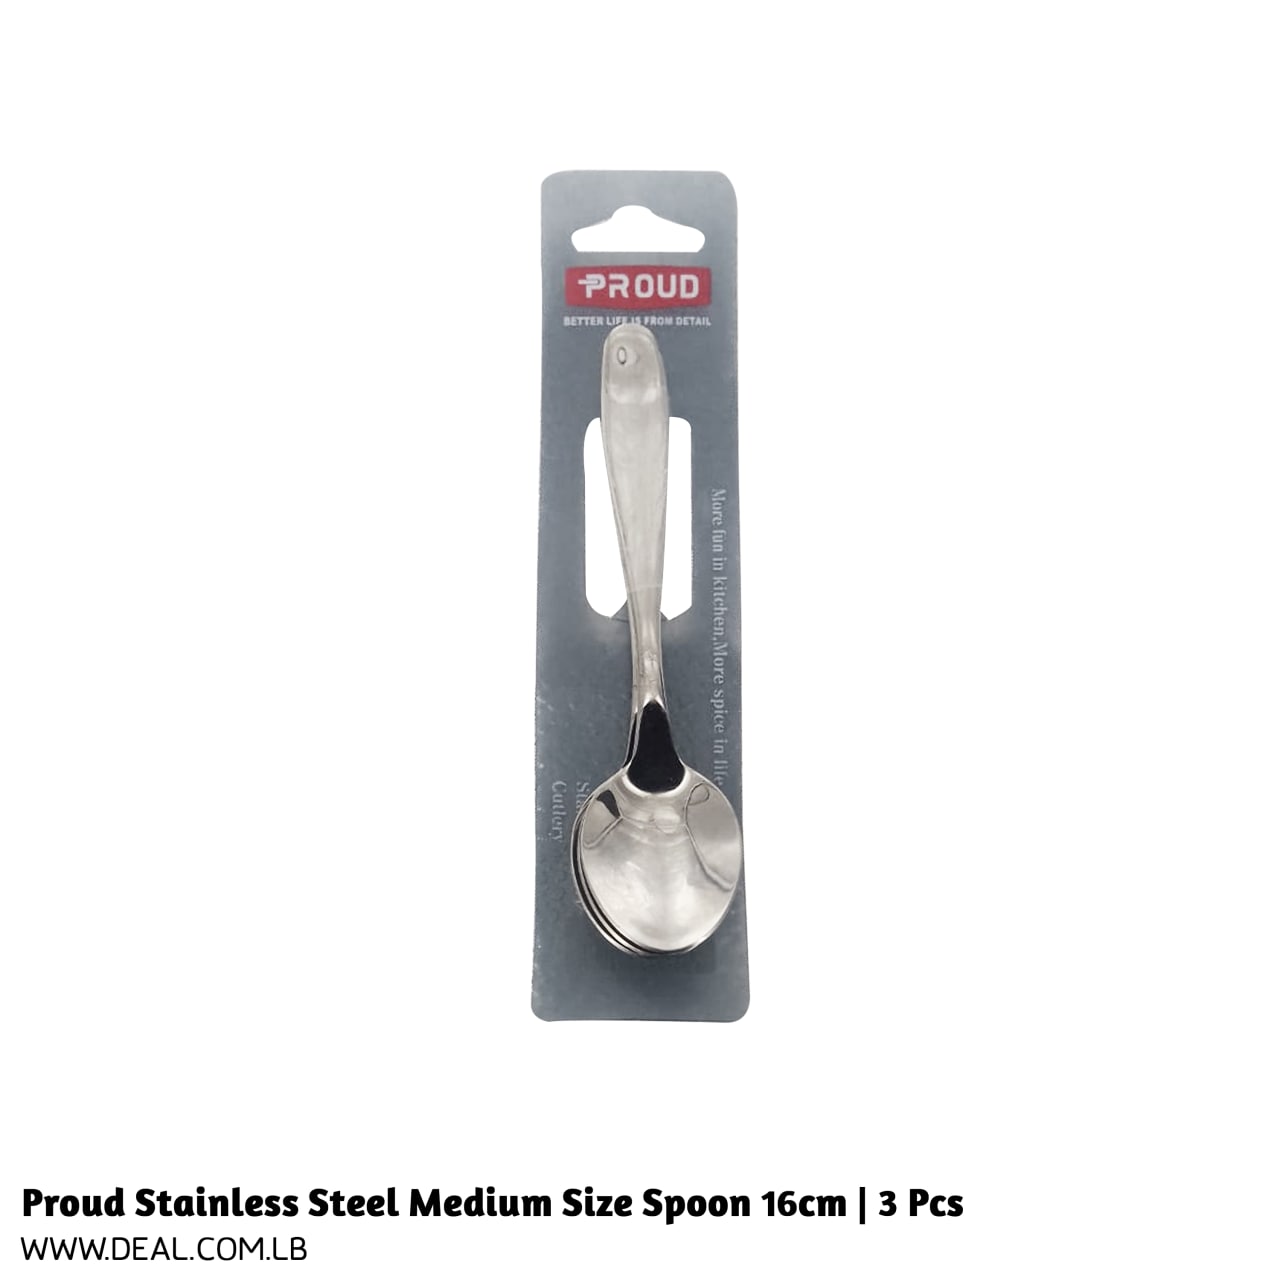 Proud Stainless Steel Medium Size Spoon 16cm | 3 Pcs